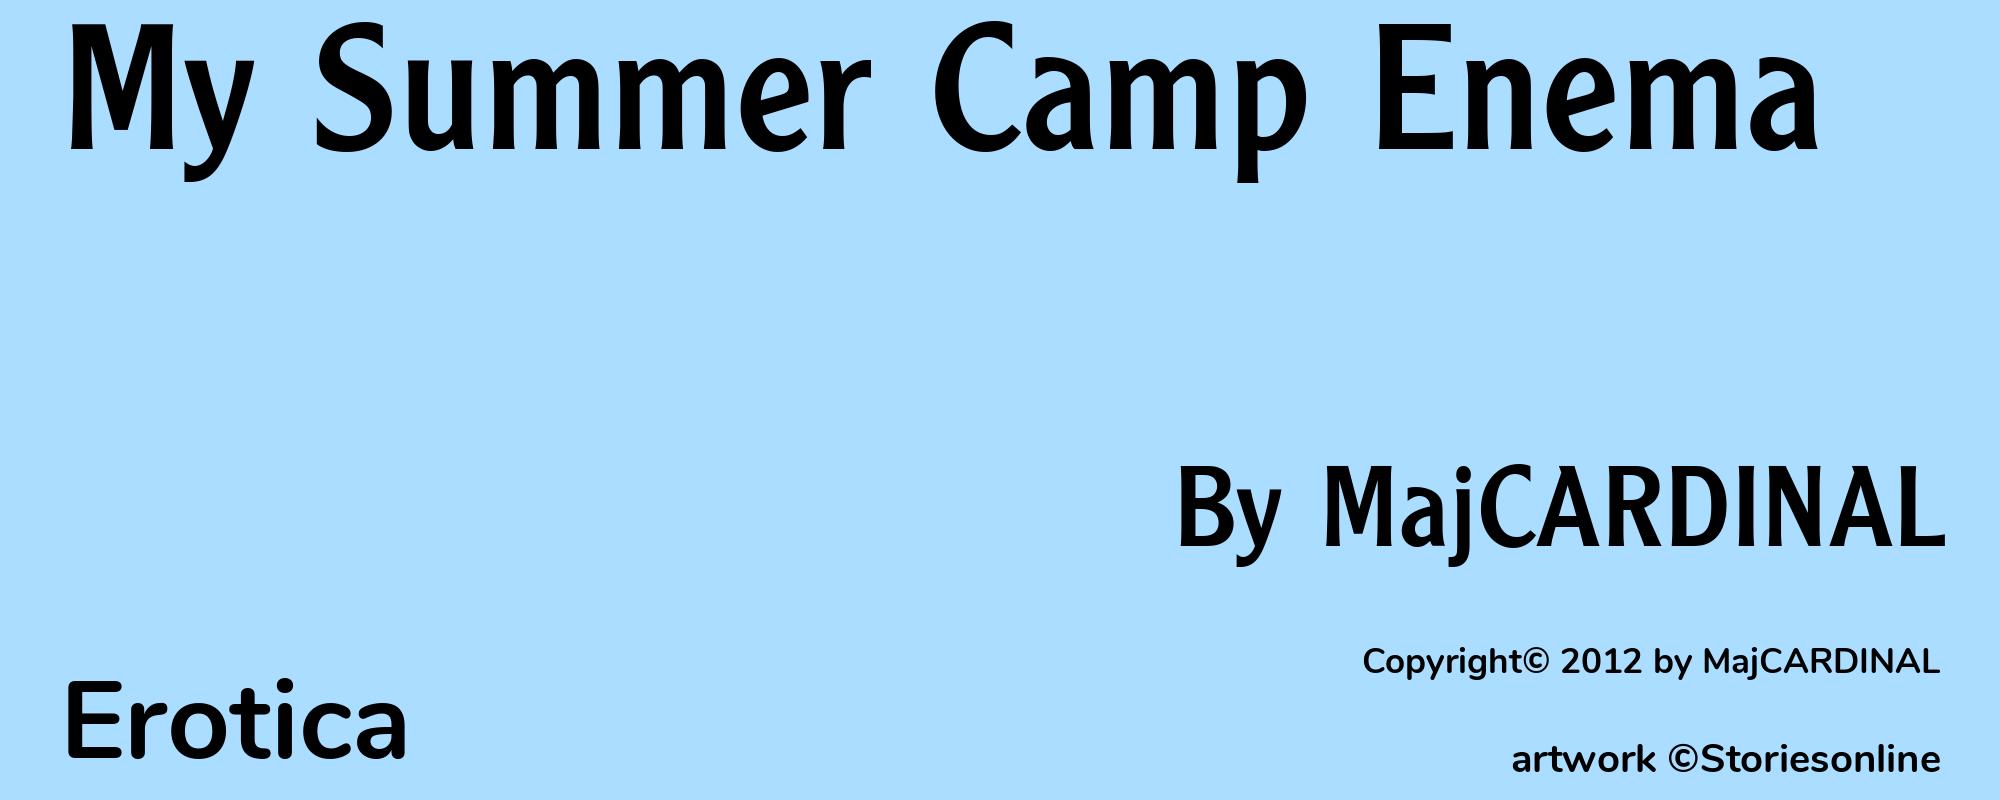 My Summer Camp Enema - Cover